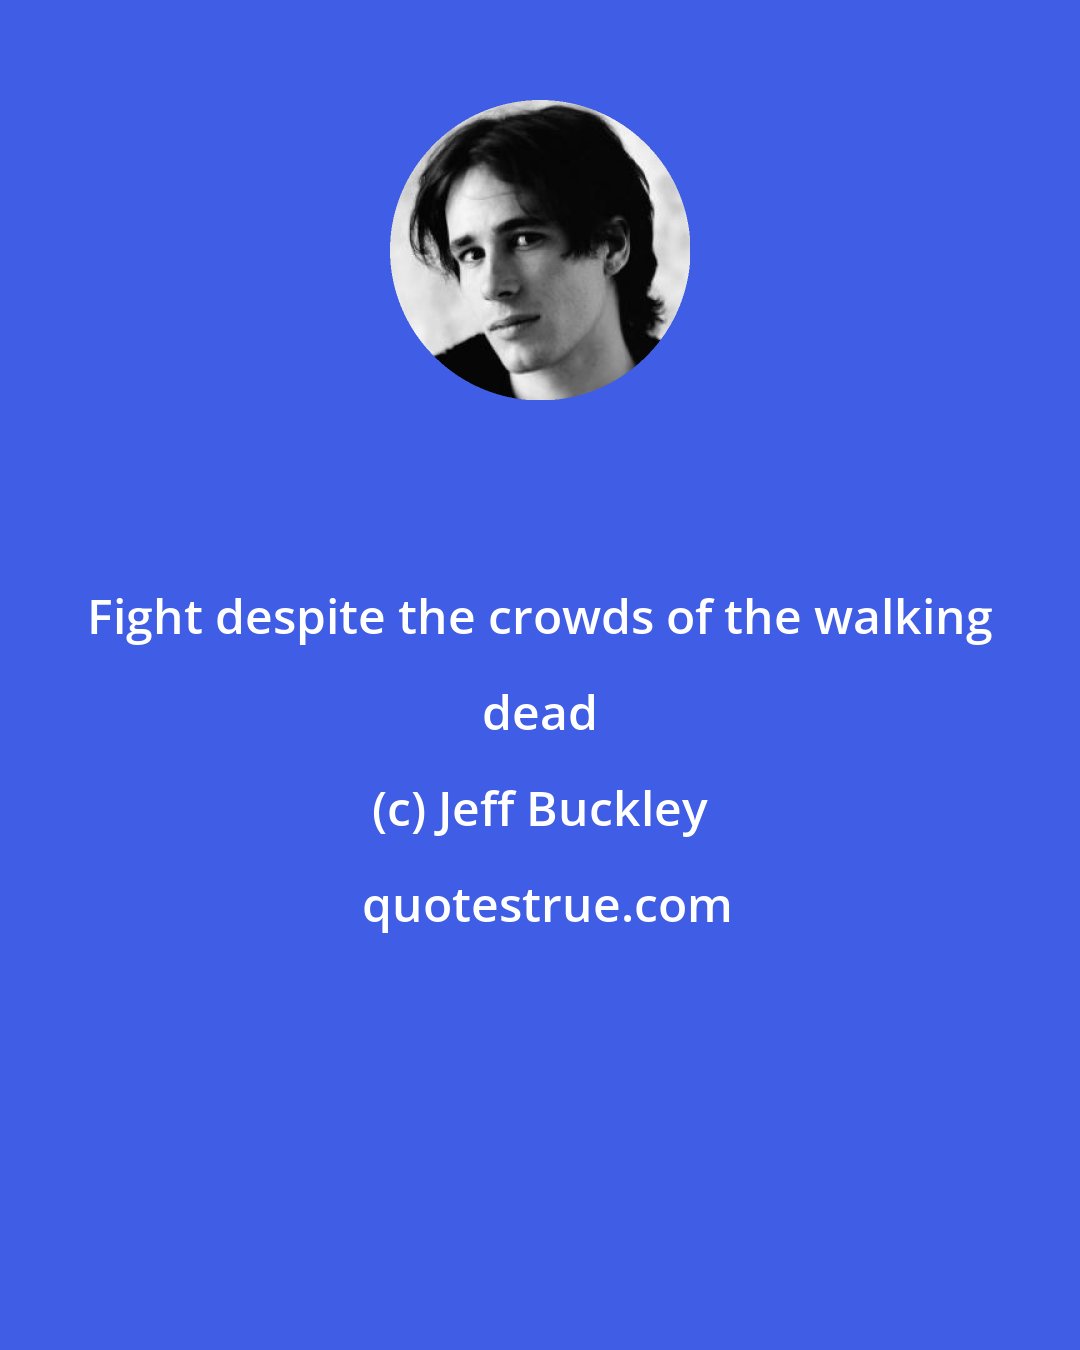 Jeff Buckley: Fight despite the crowds of the walking dead